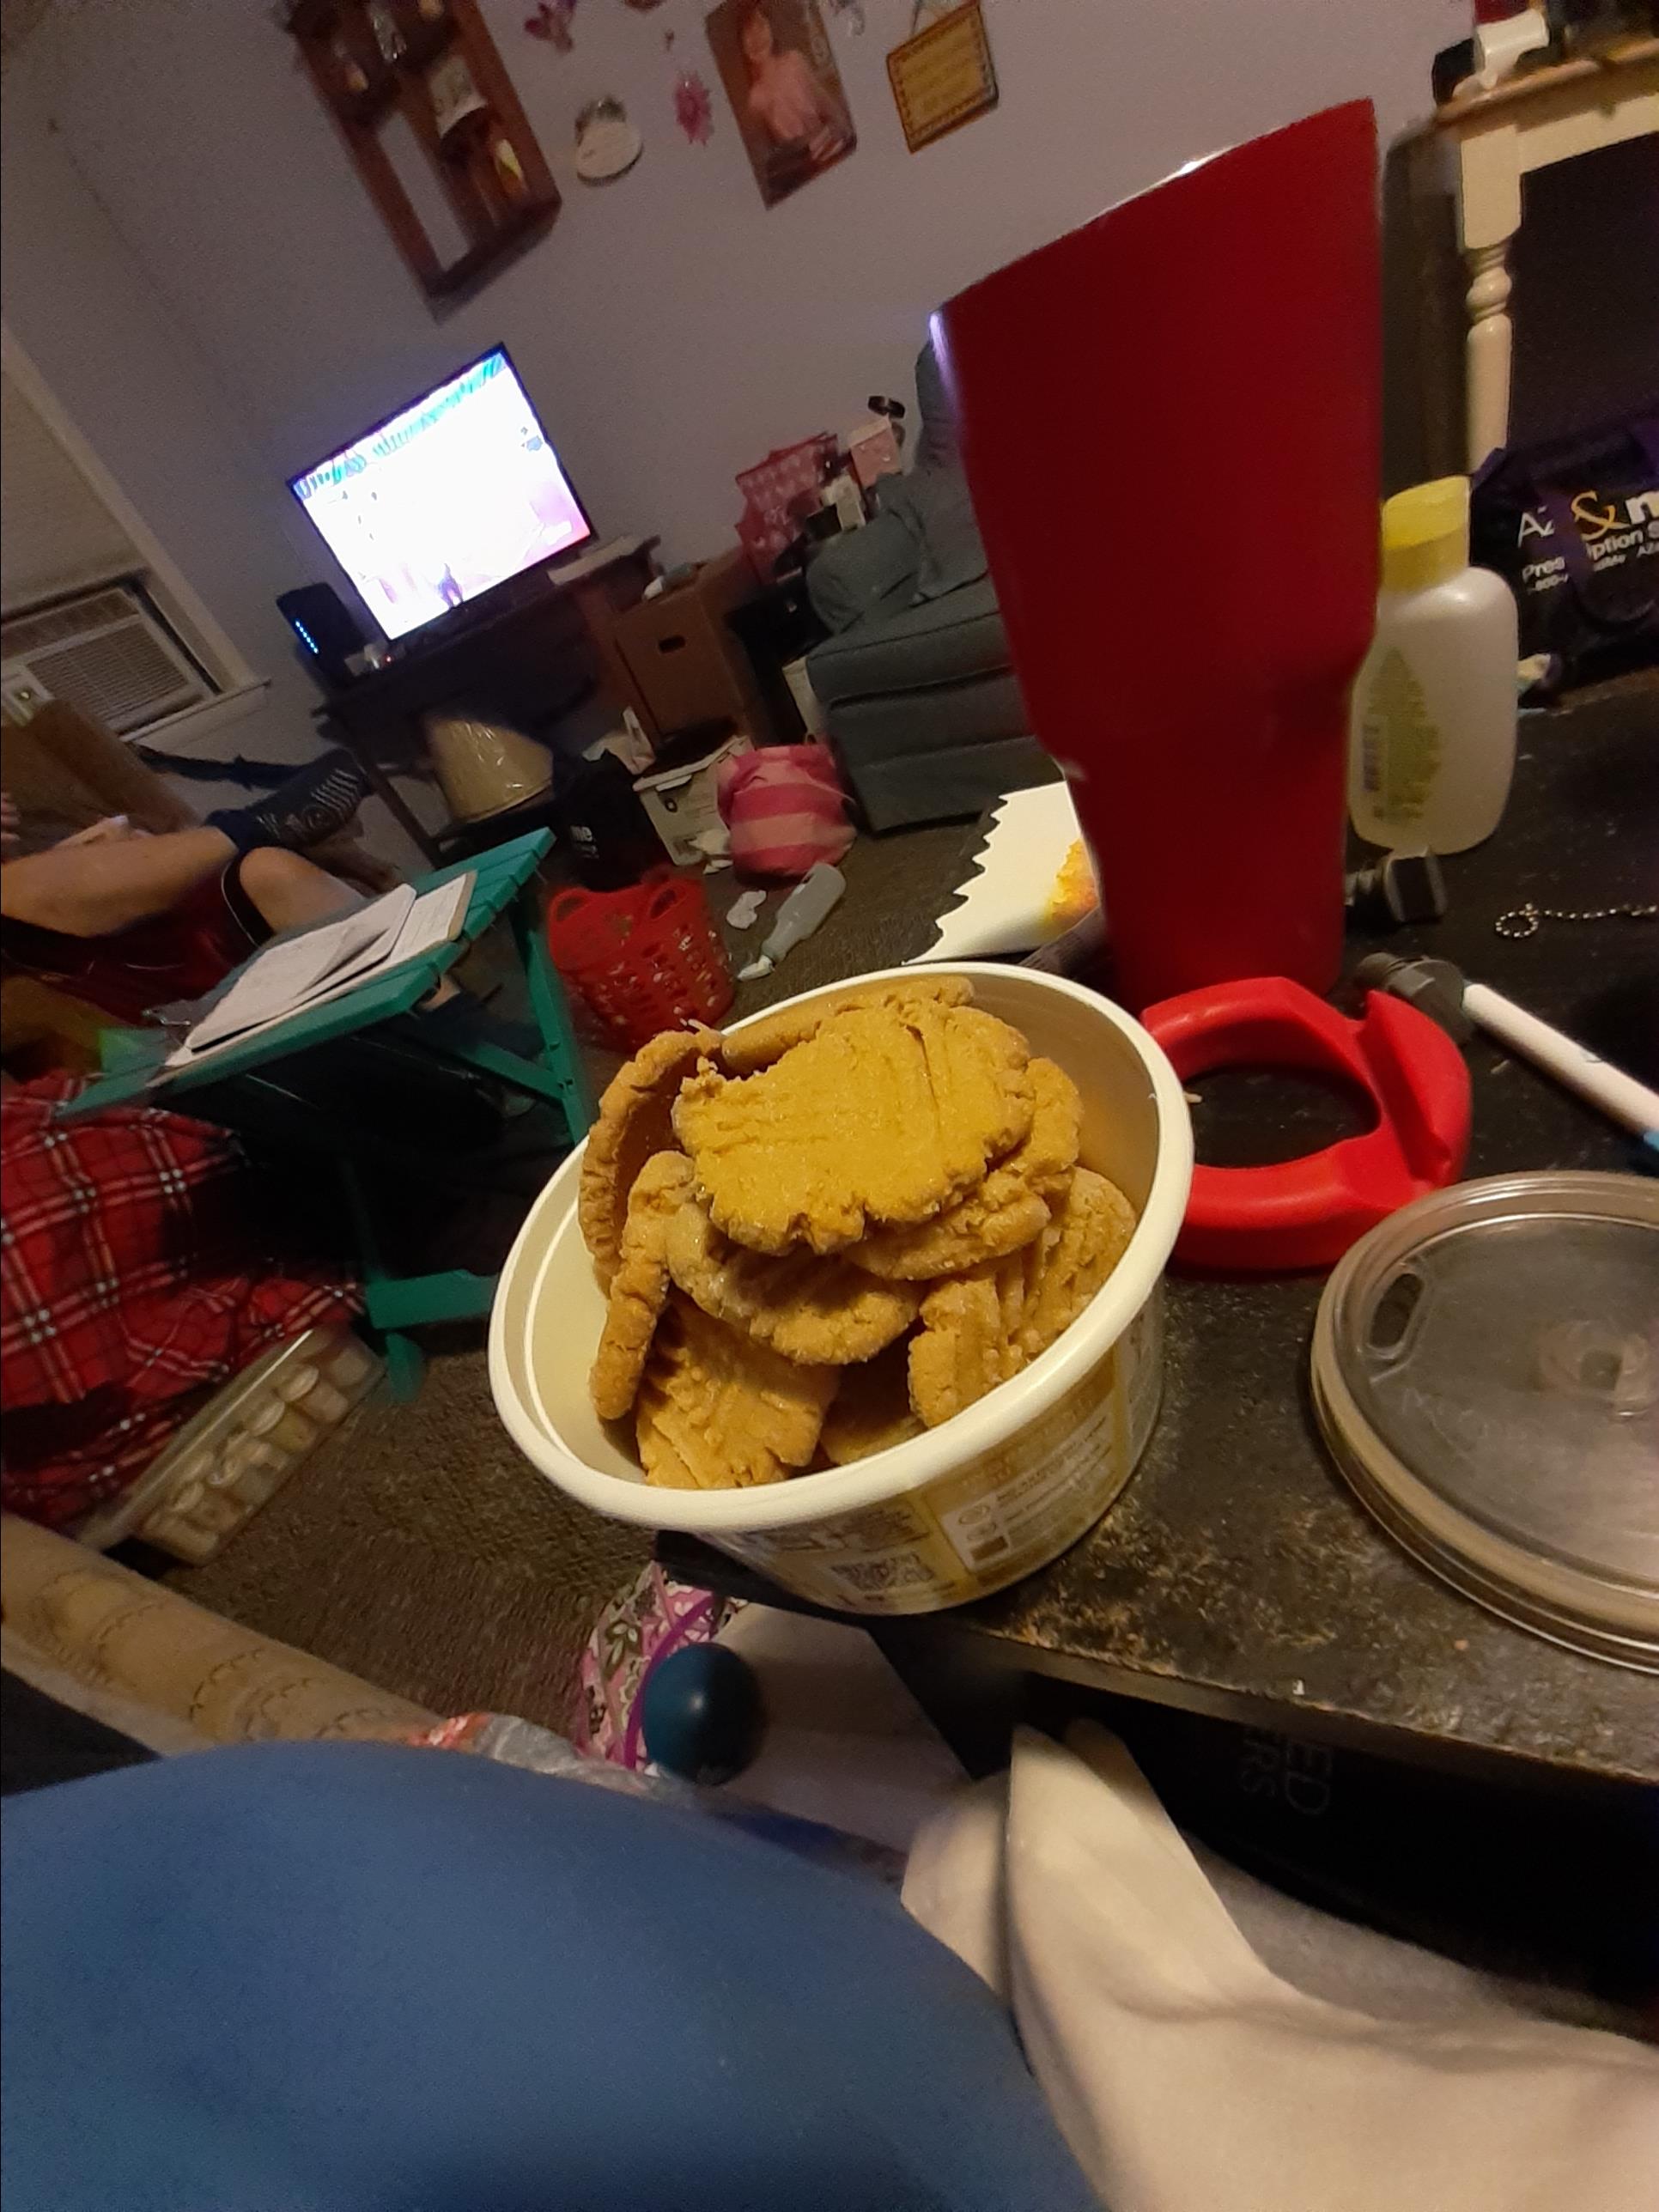 3-Ingredient Peanut Butter Cookies 